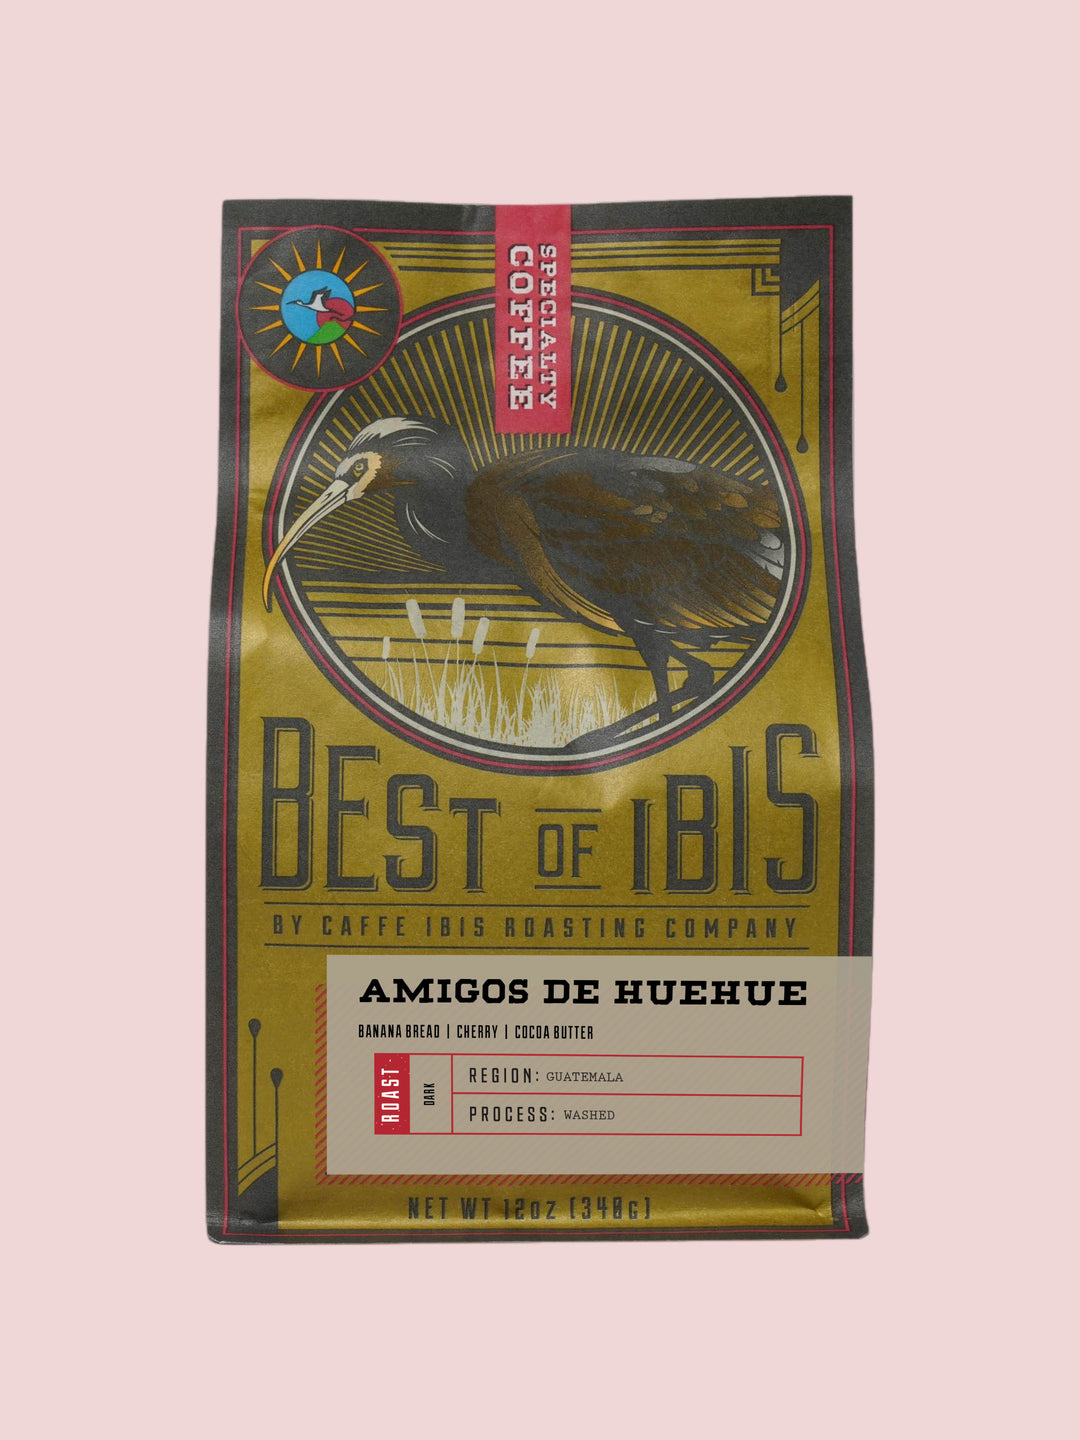 Caffe Ibis Amigos de Huehue coffee blend in a "Best of Ibis" twelve ounce bag; front view.